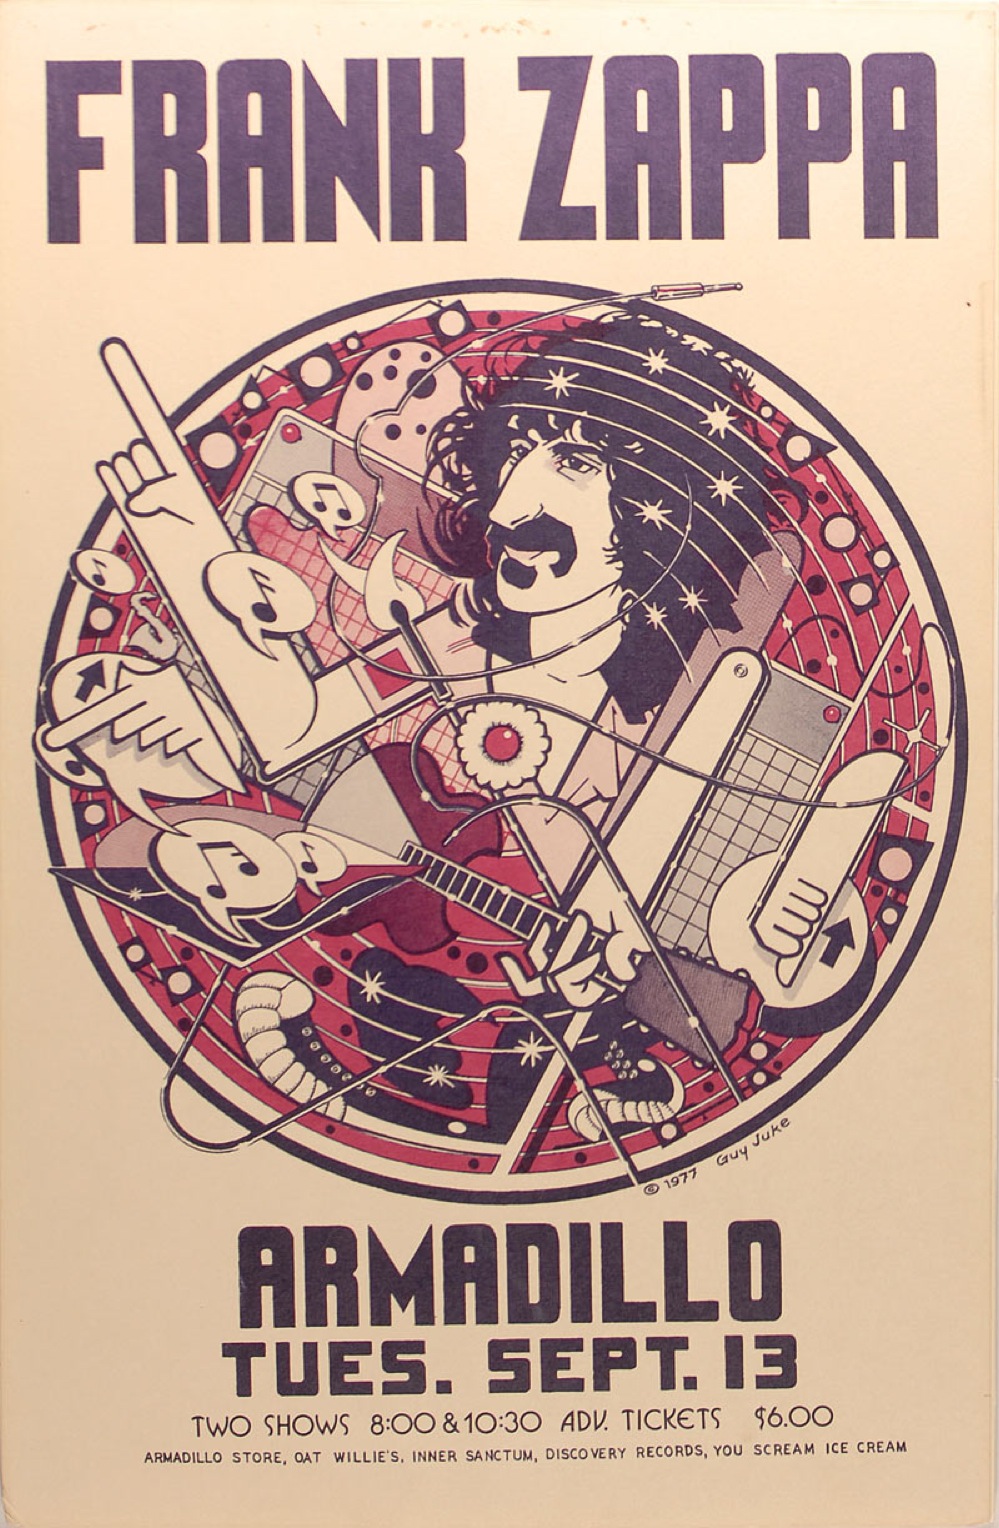 Lot #694 Frank Zappa